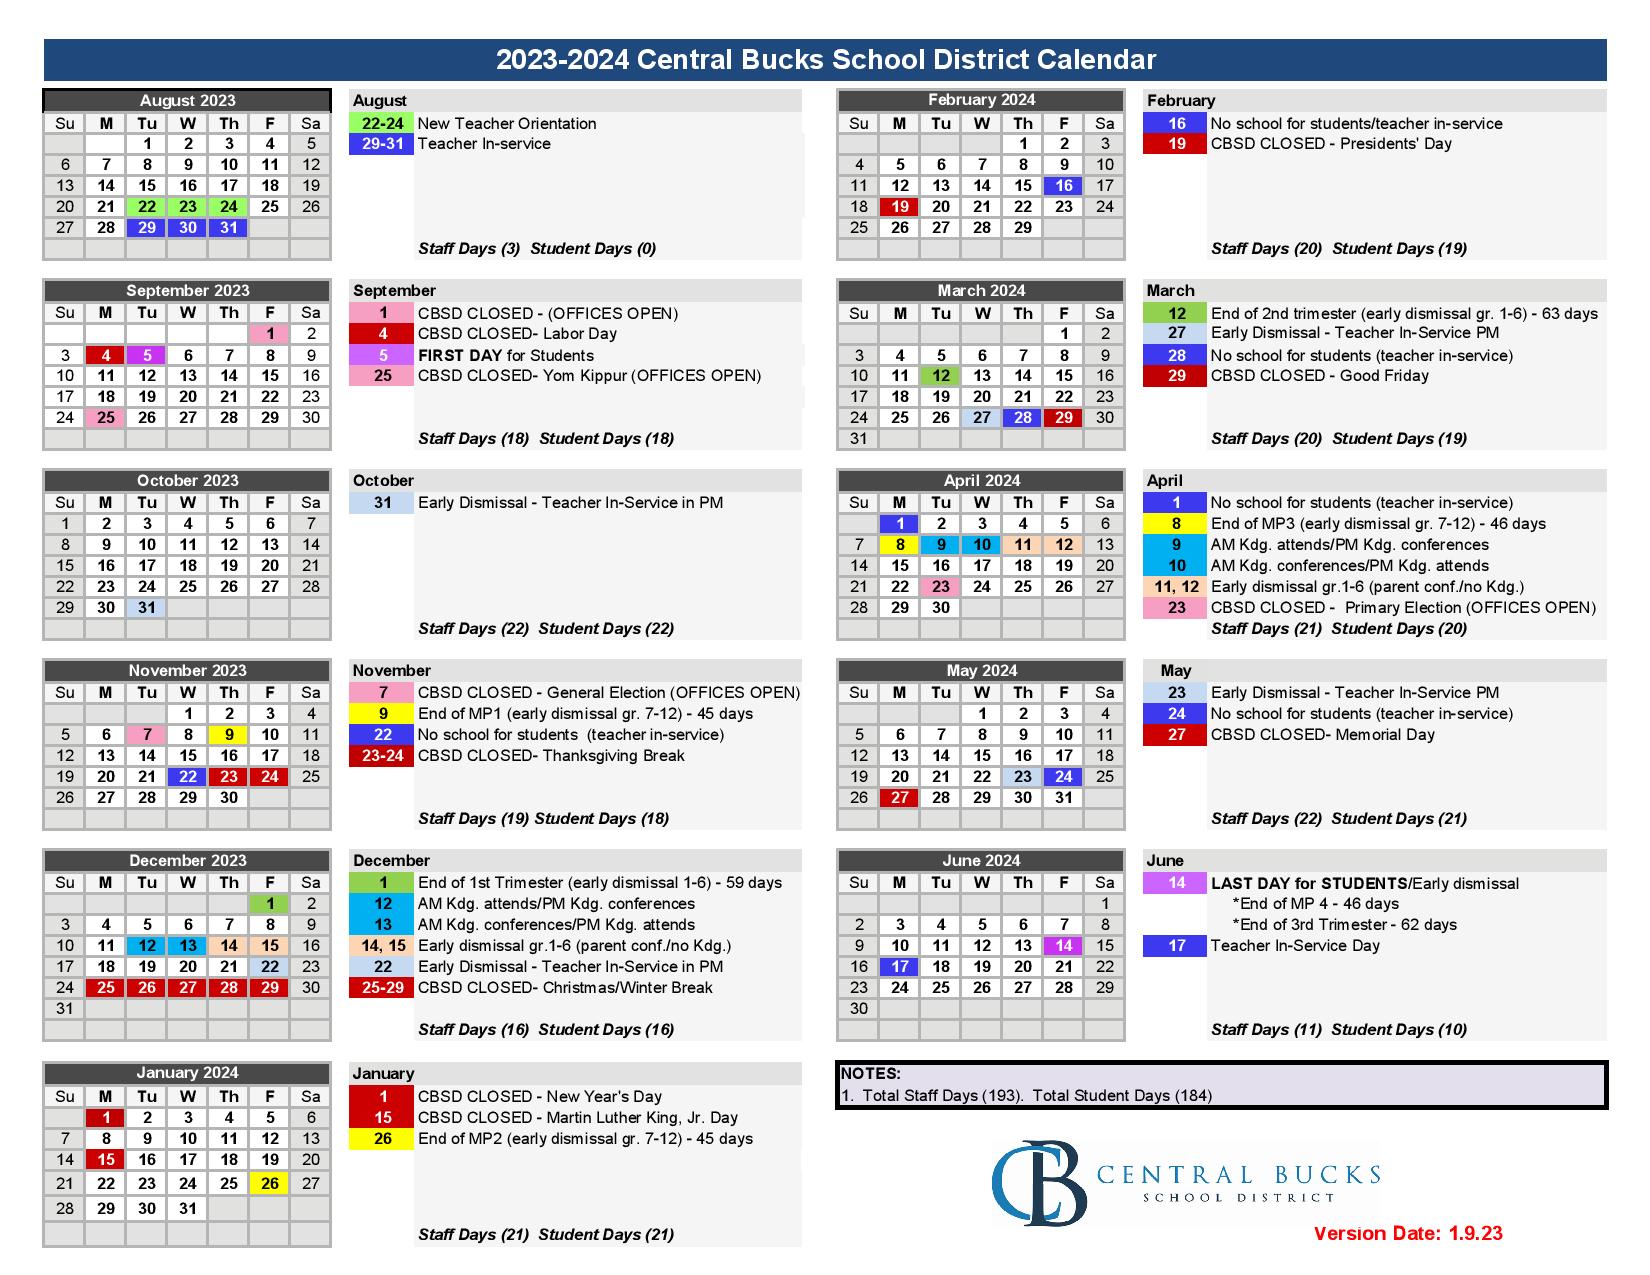 Central Bucks School District Calendar 20232024 in PDF